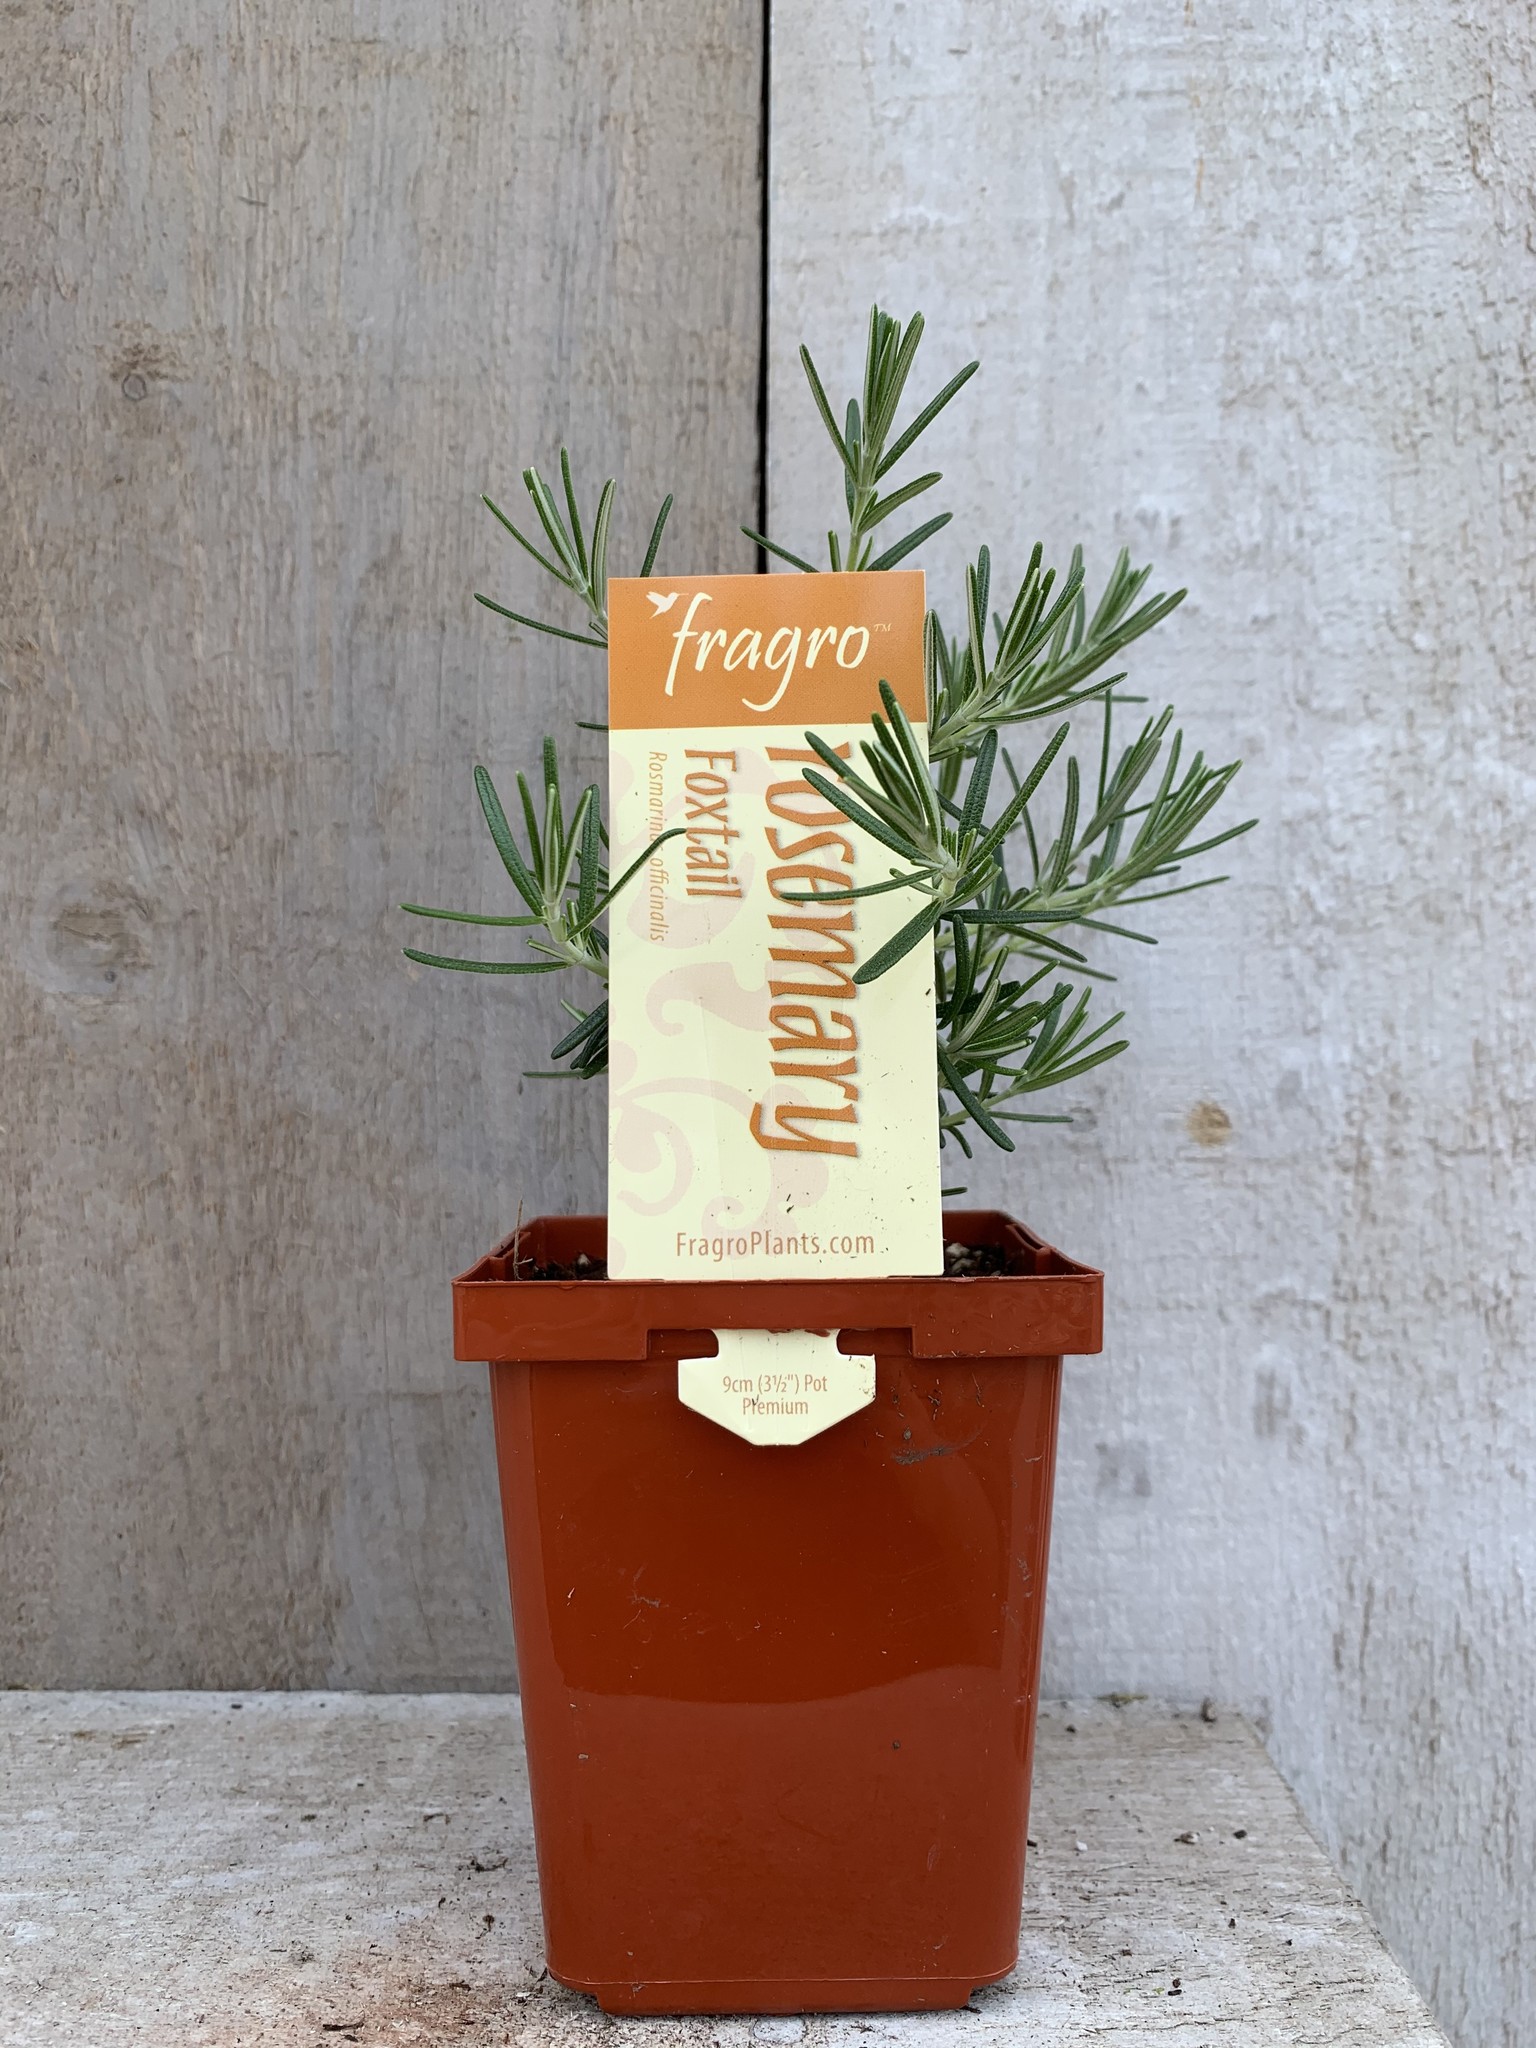 Fragro Rosemary Foxtail 3.5" Premium Herb